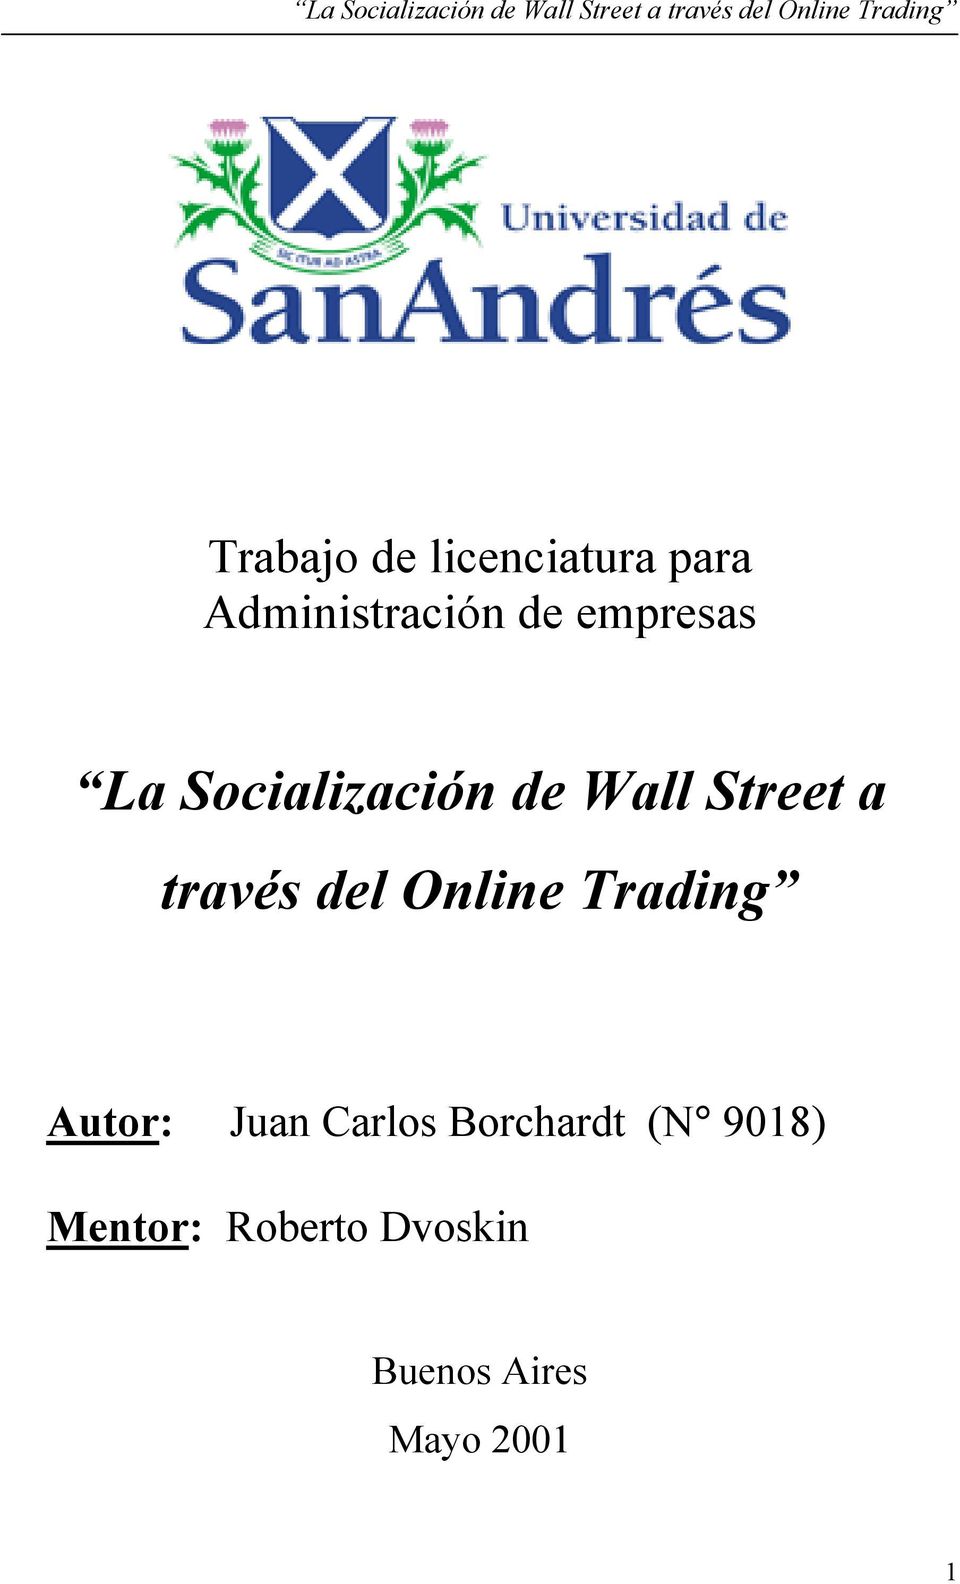 del Online Trading Autor: Juan Carlos Borchardt (N